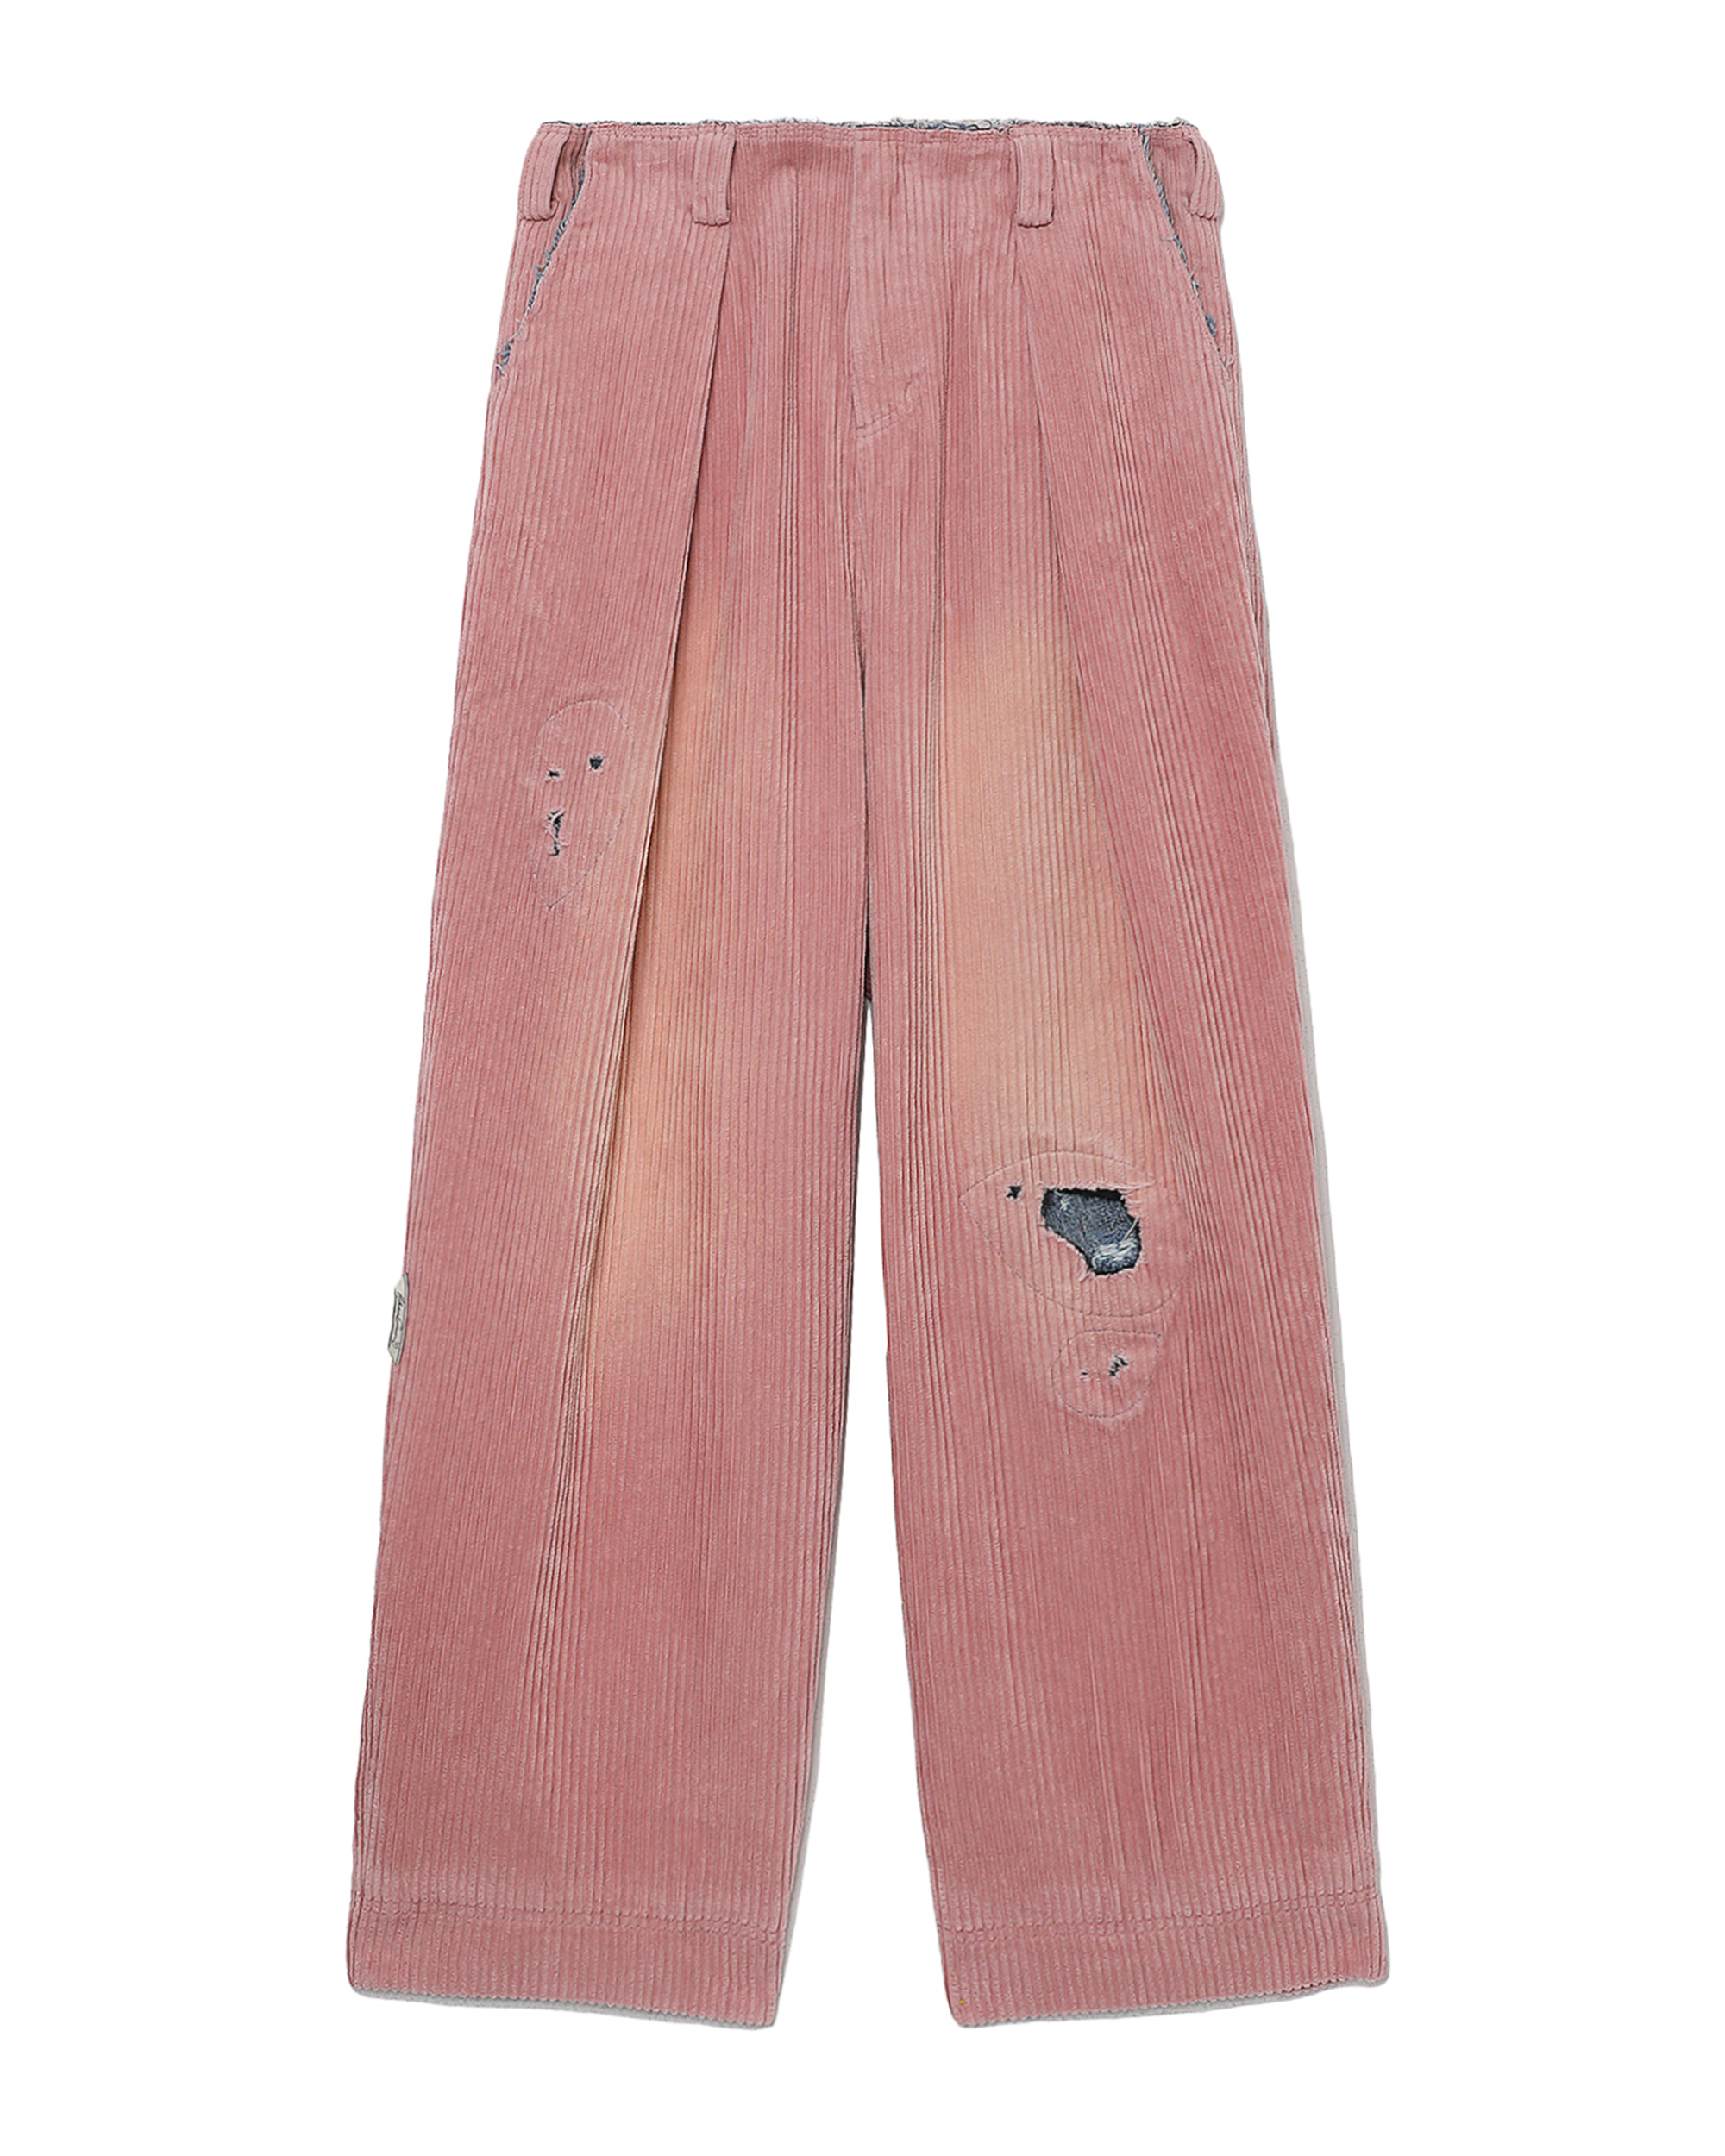 Designer Long Pants for Women | I.T | ITeSHOP Hong Kong